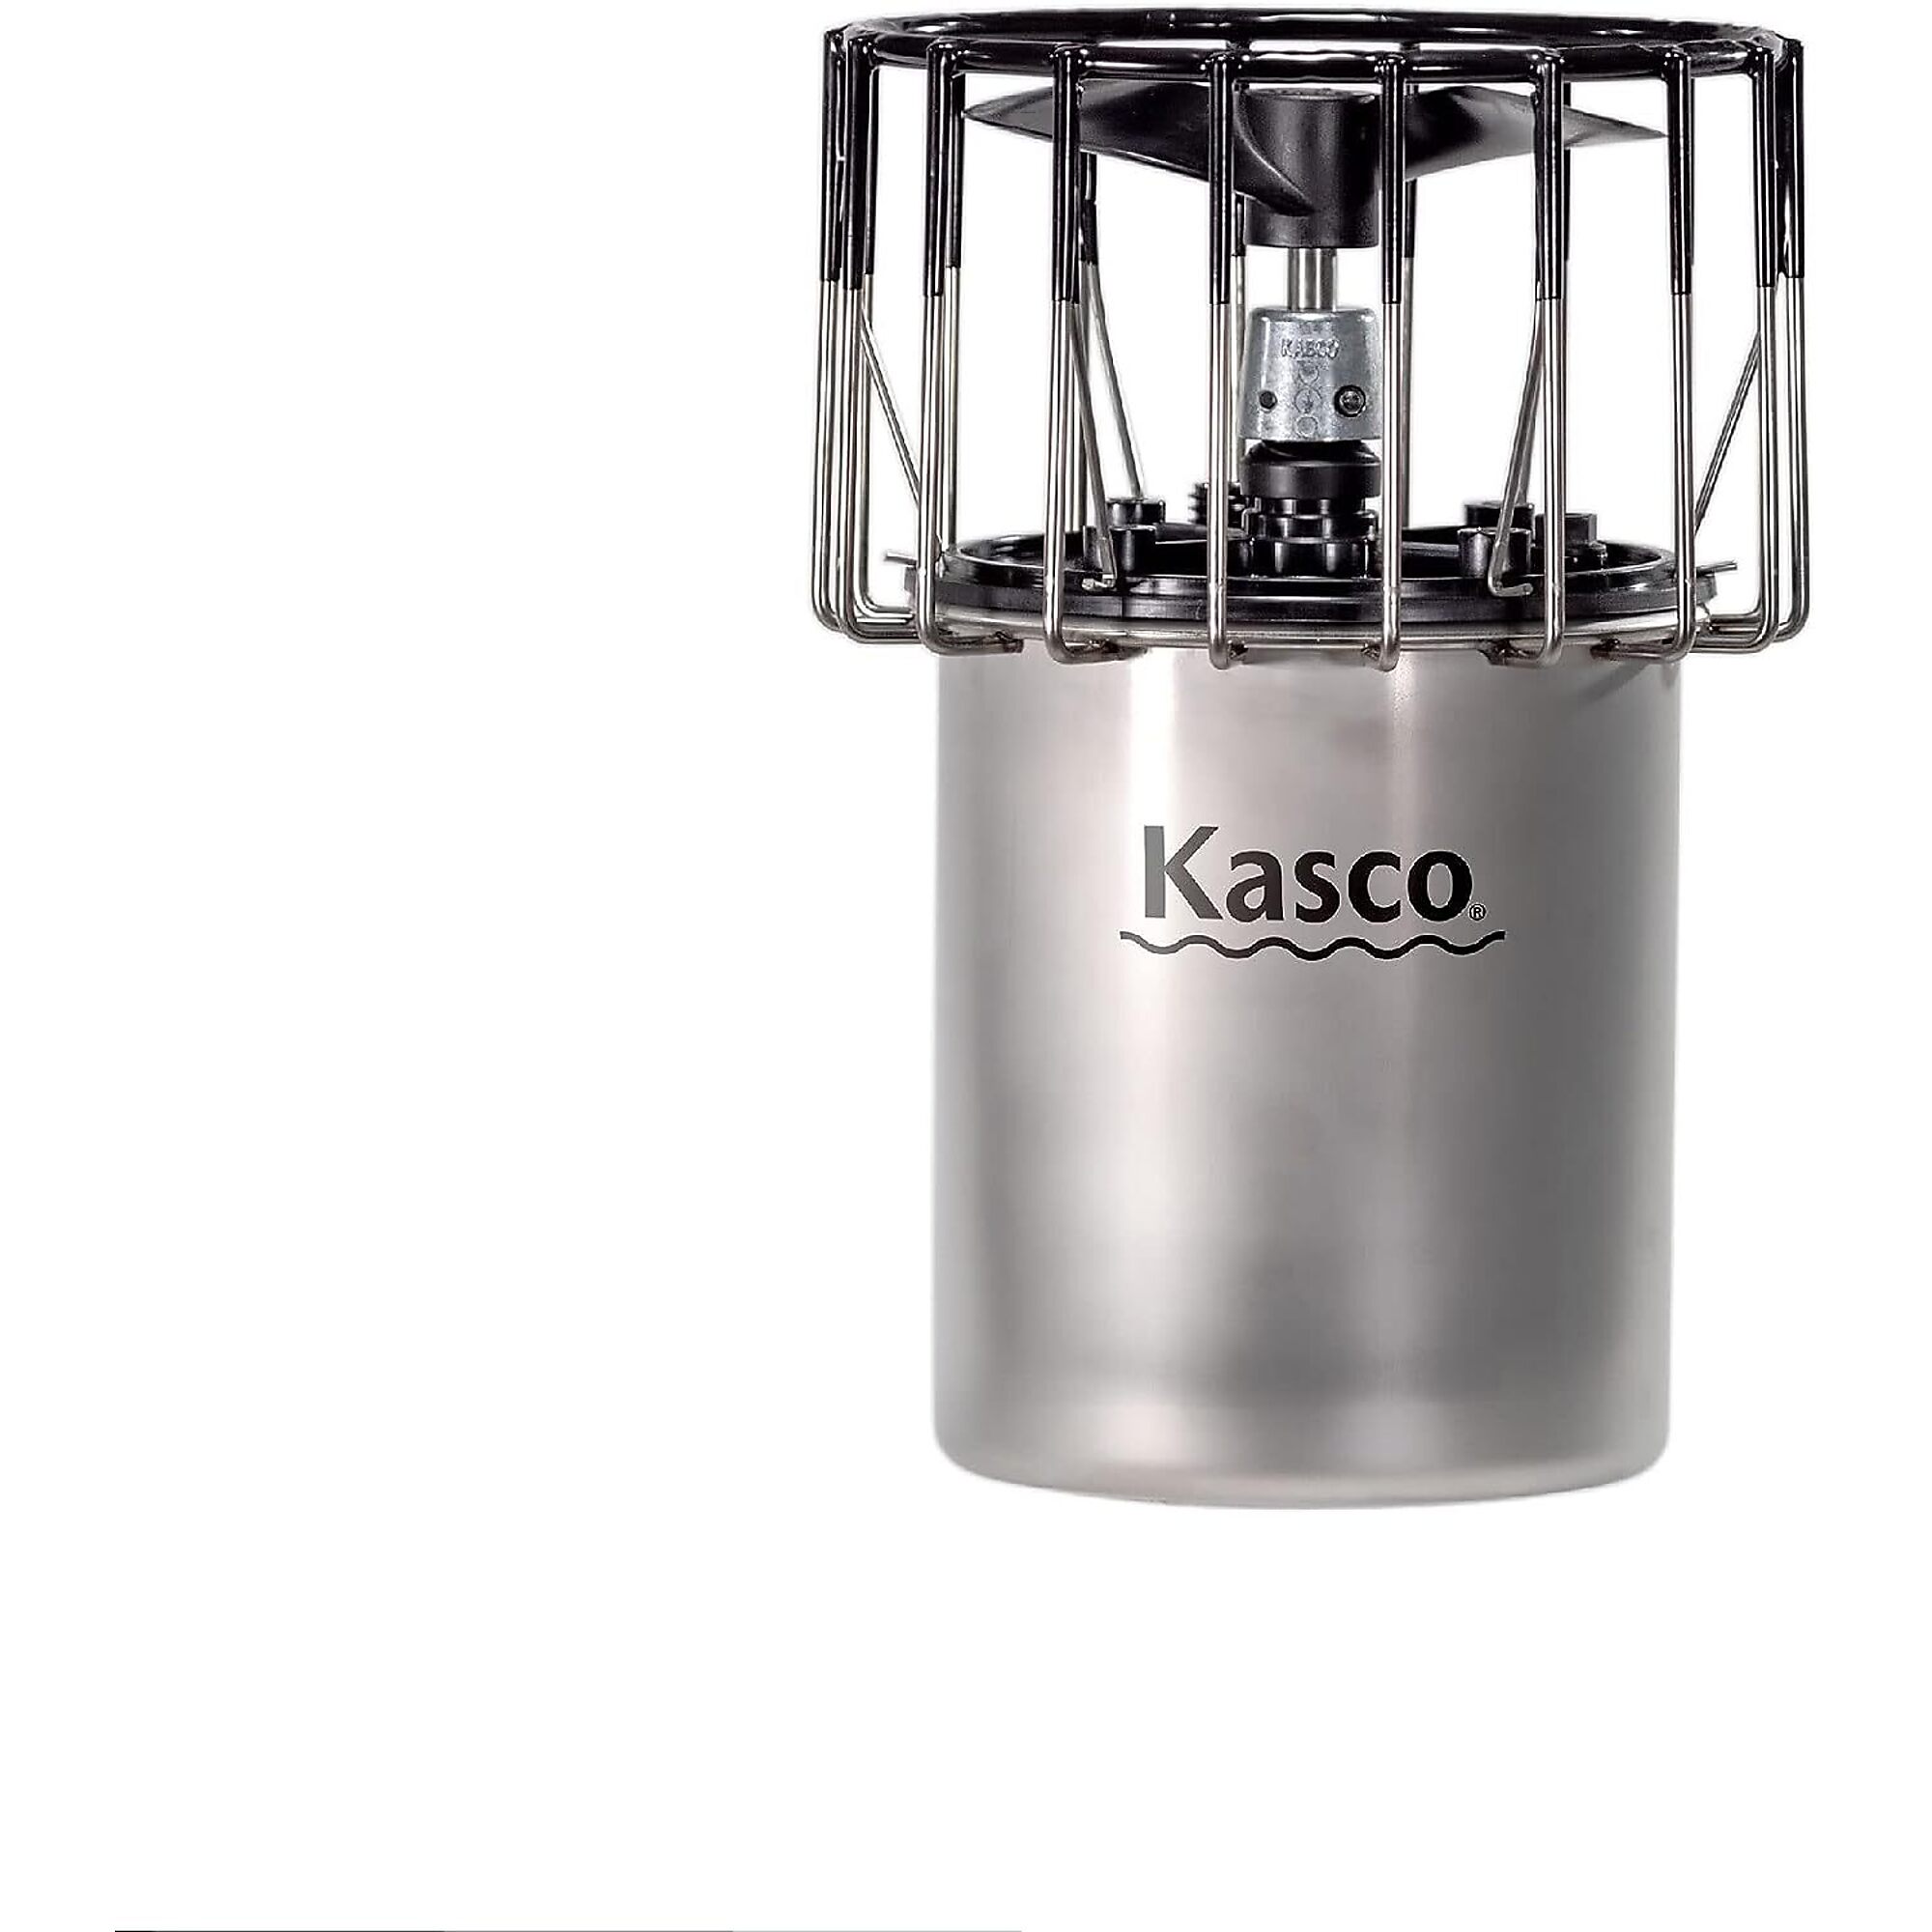 Kasco, De-icer Single for Pond and Lake Bubbler 240V, Volts 120 Horsepower 1 Model 4400HD200